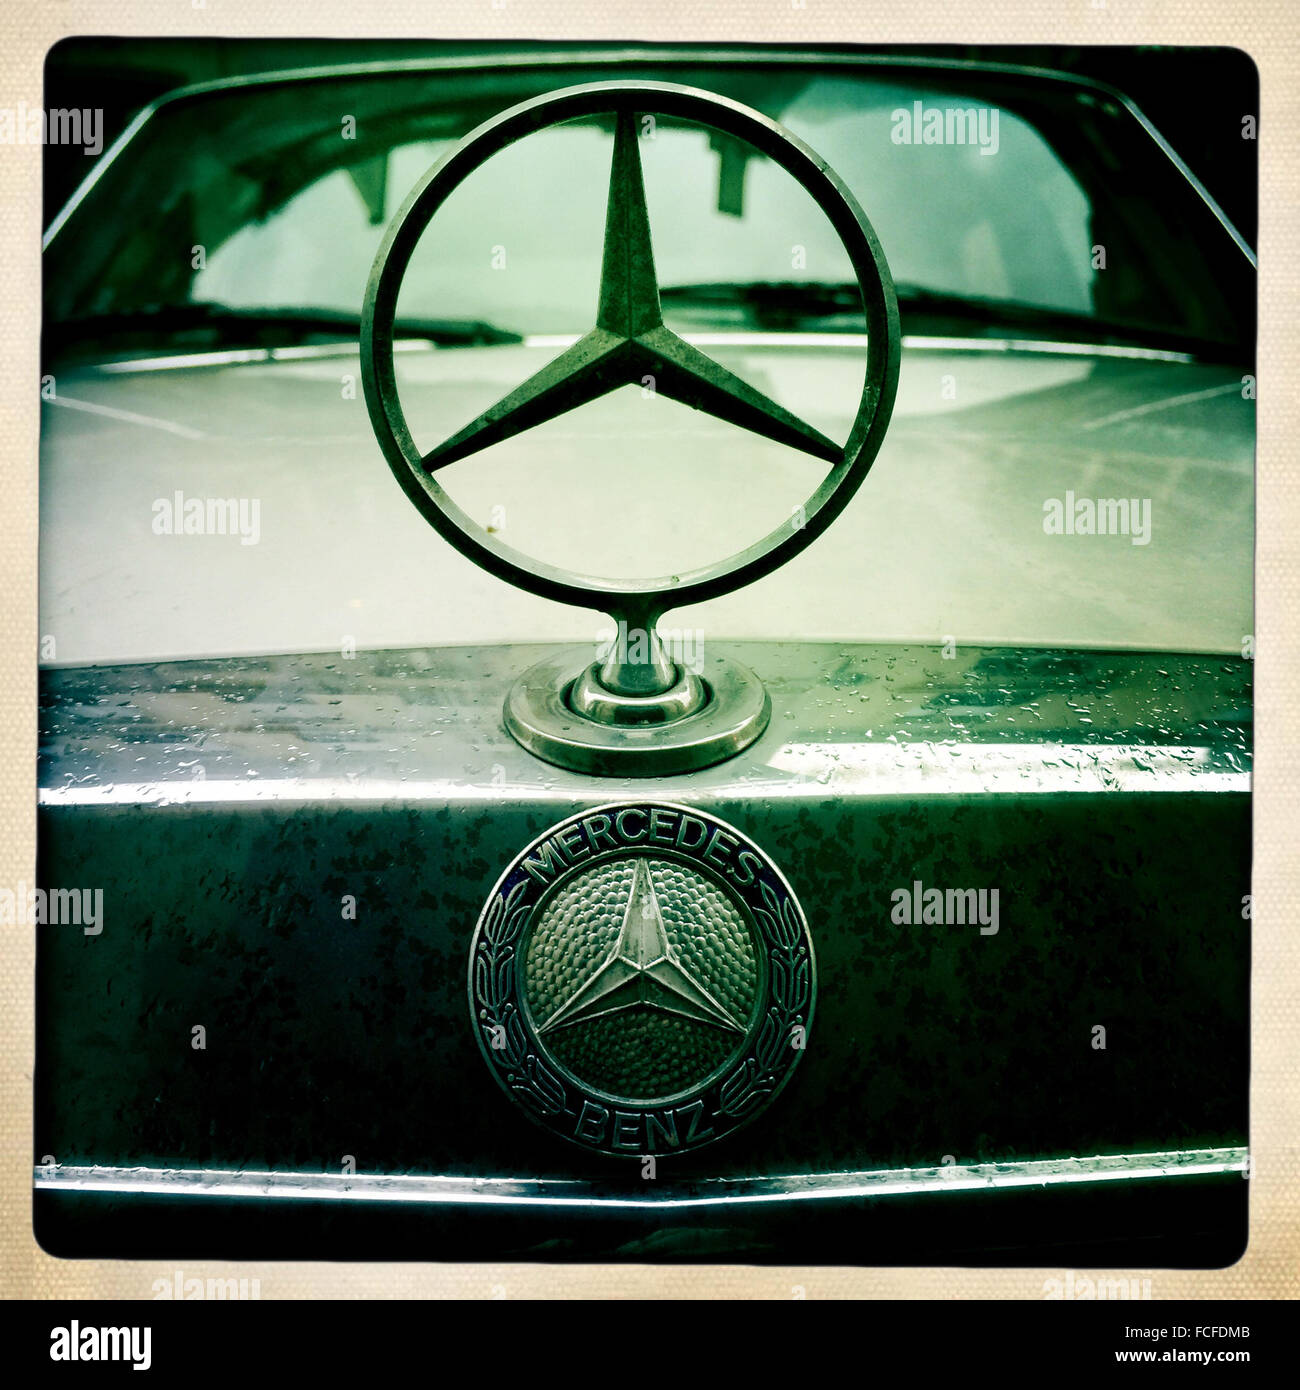 Mercedes-Benz logo. Stock Photo